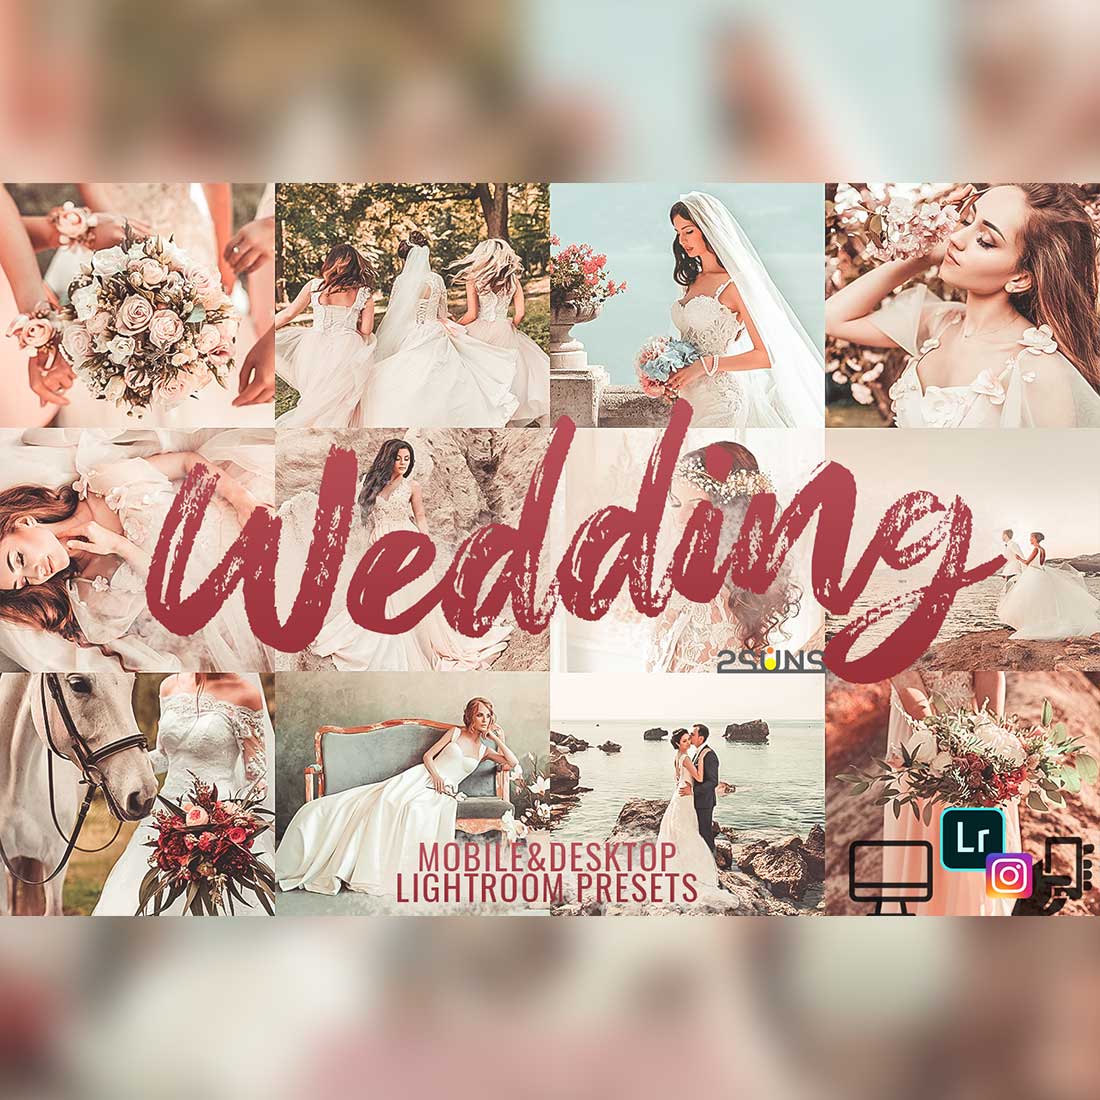 Bright Wedding Instagram Lightroom Presets Cover Image.